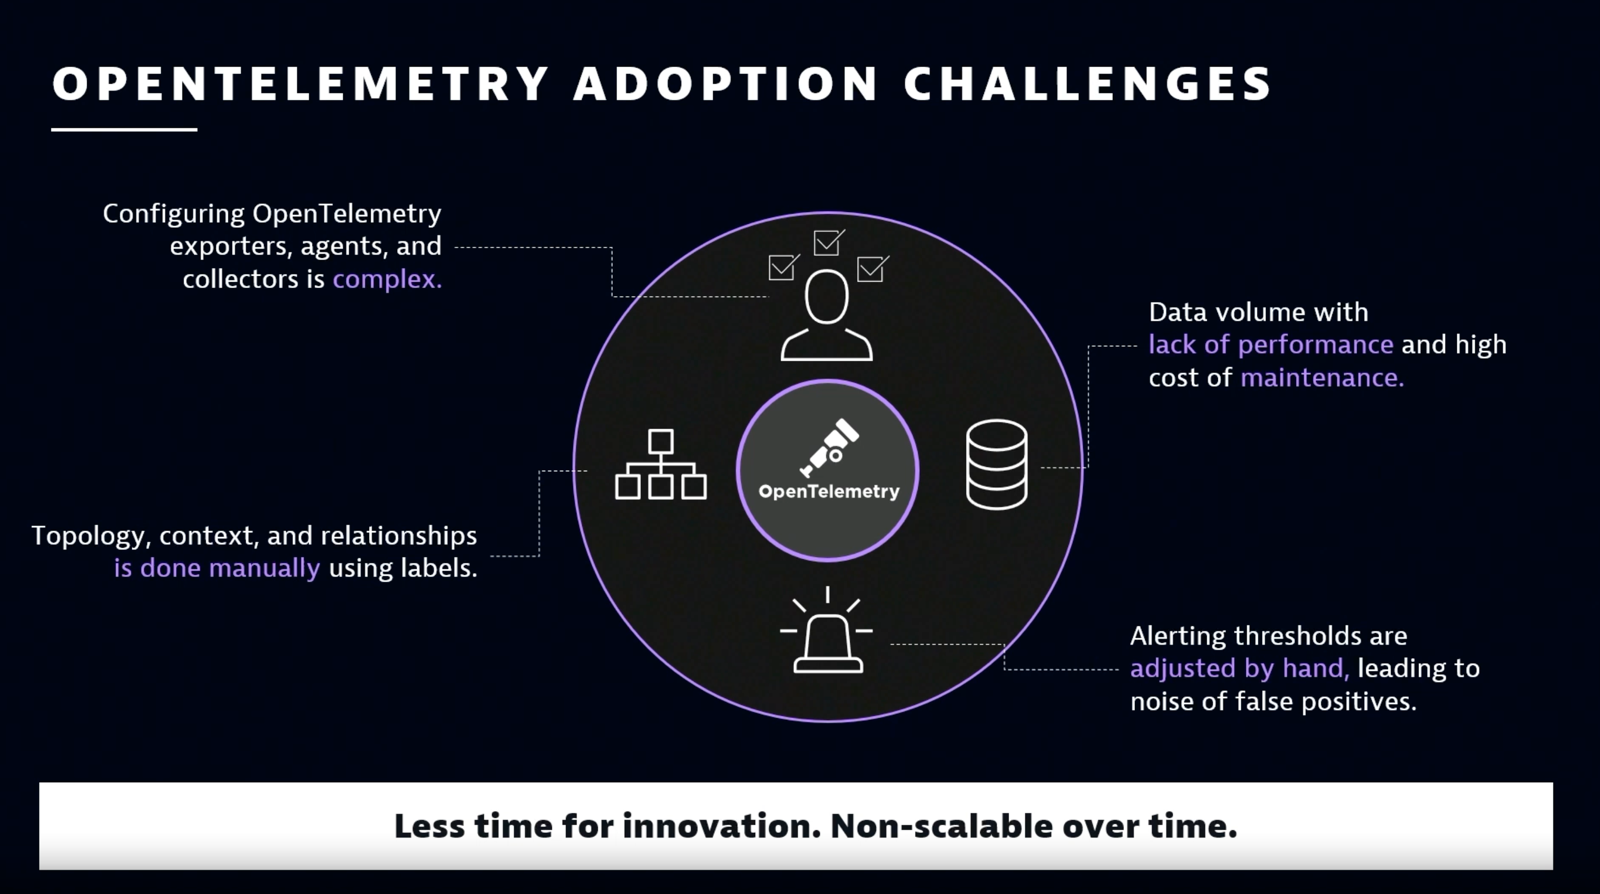 OpenTelemetry adoption challenges slide